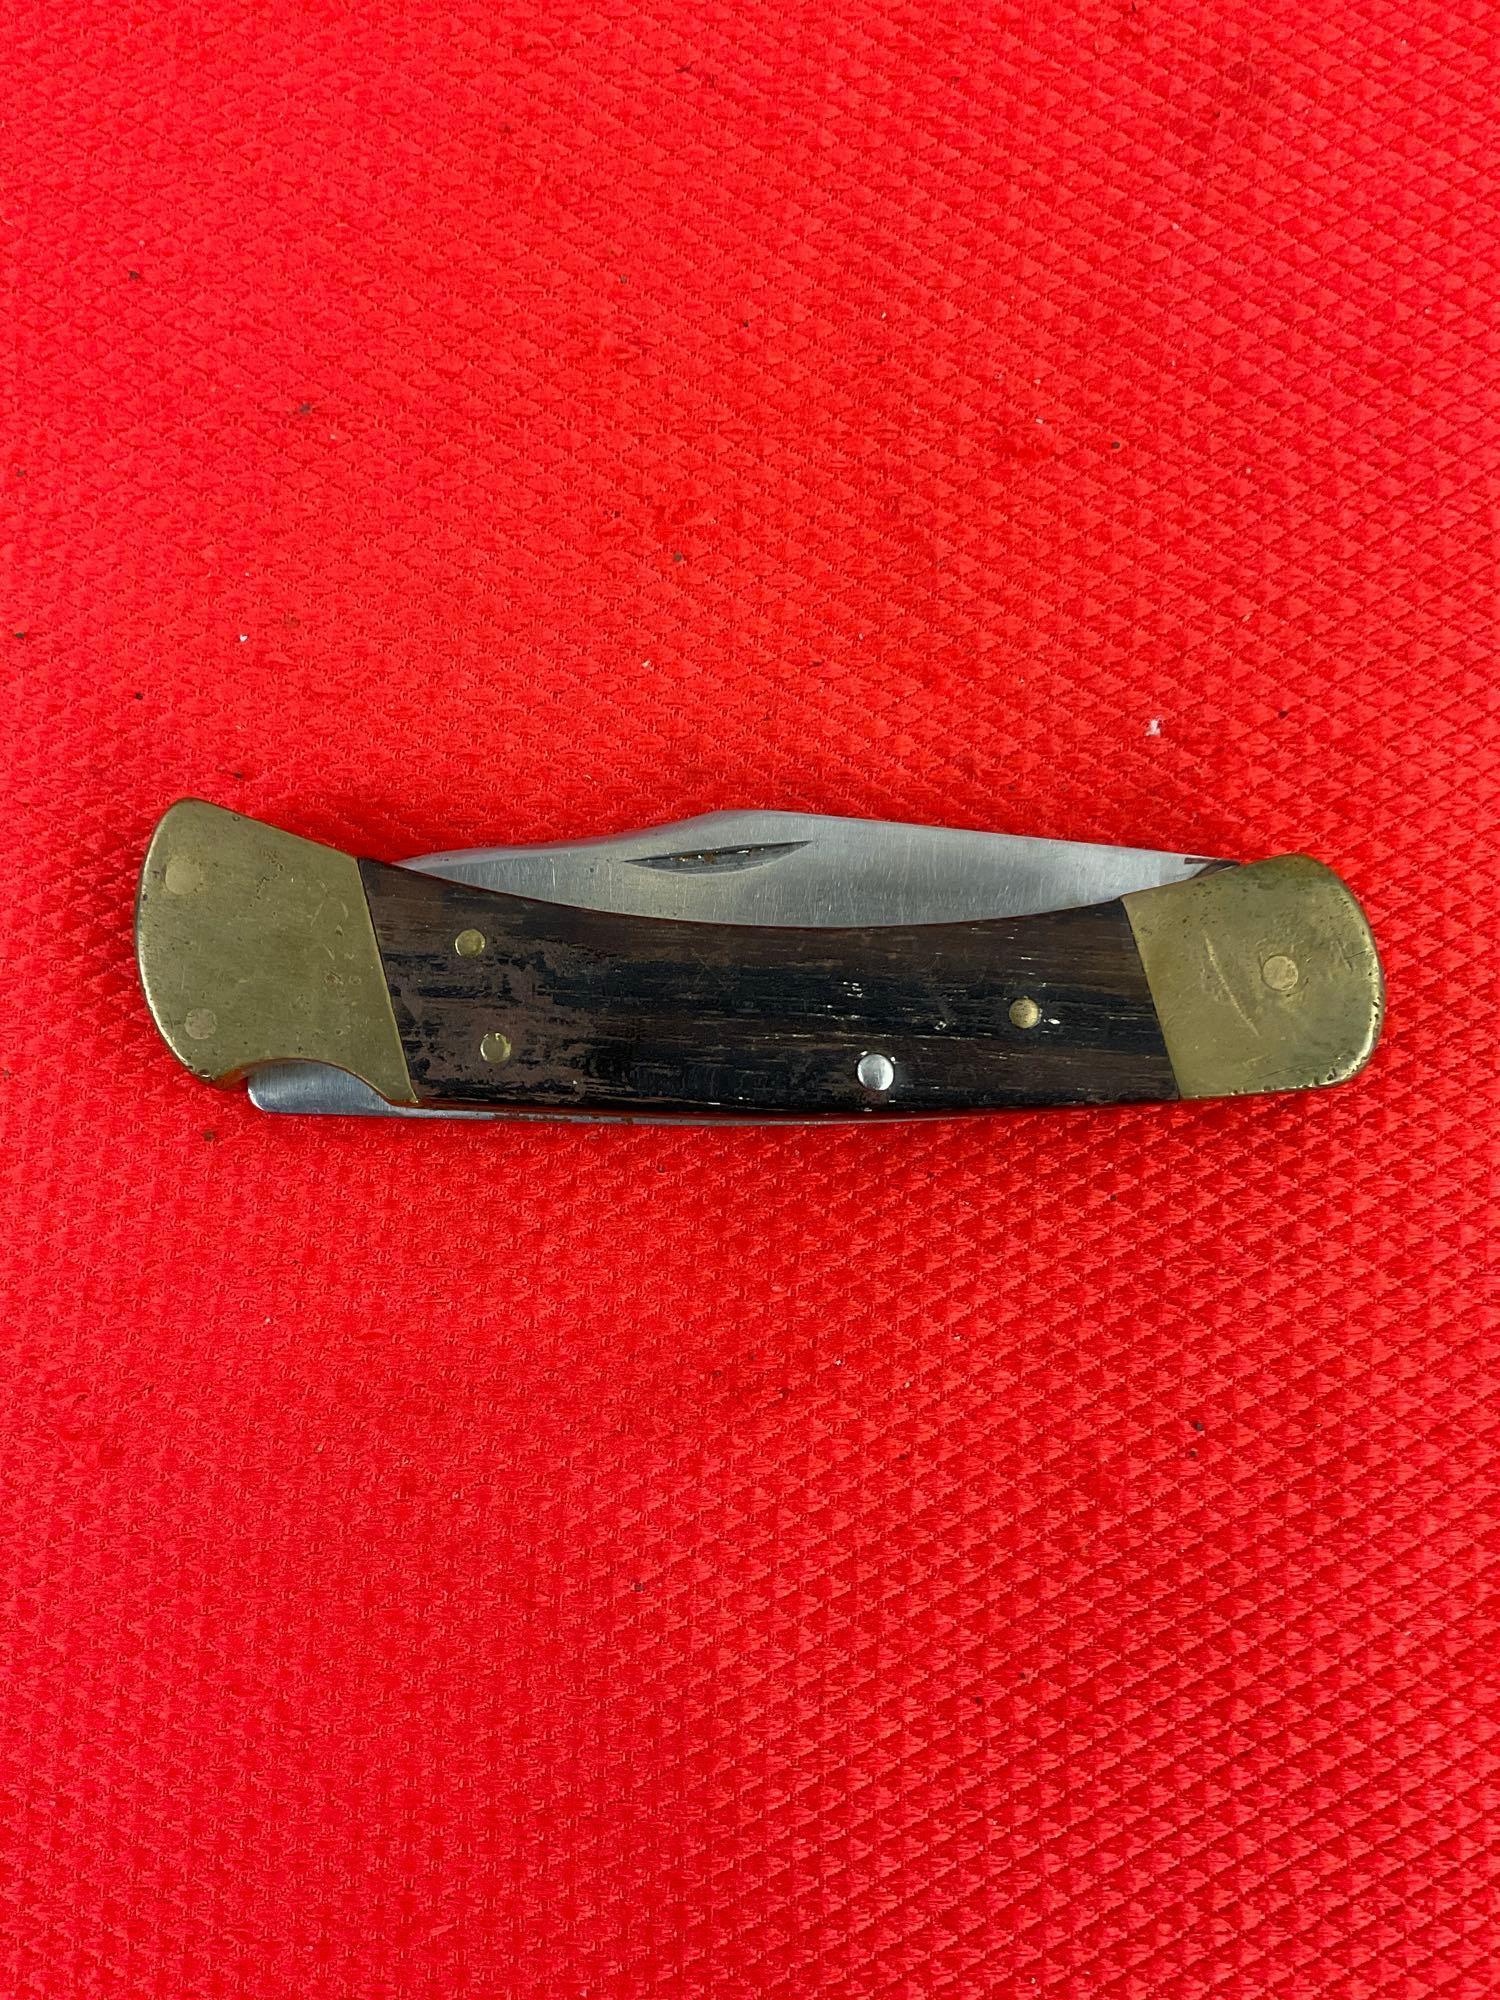 Vintage Buck 3.75" Steel Folding Blade Pocket Knife Model 110 w/ Ebony Handle & Sheath. See pics.